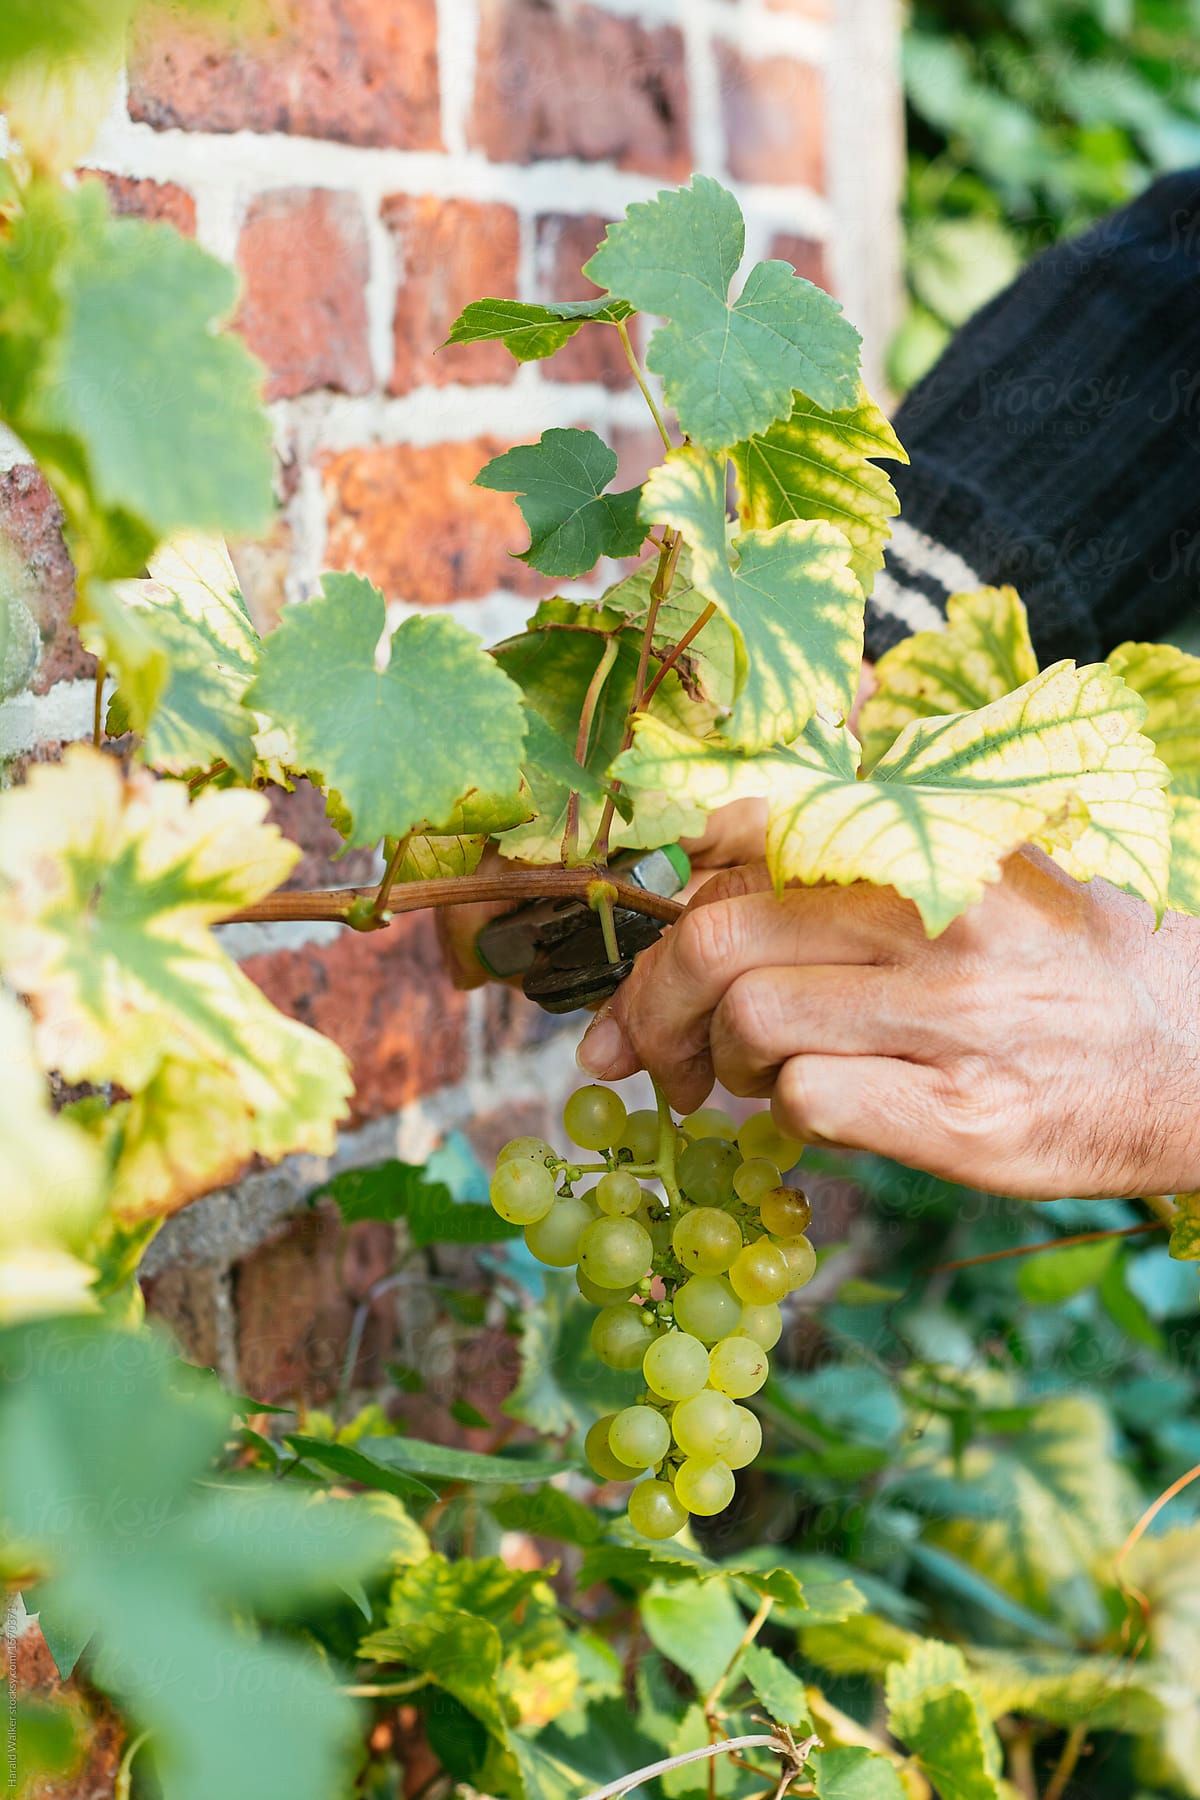 Harvesting grapes